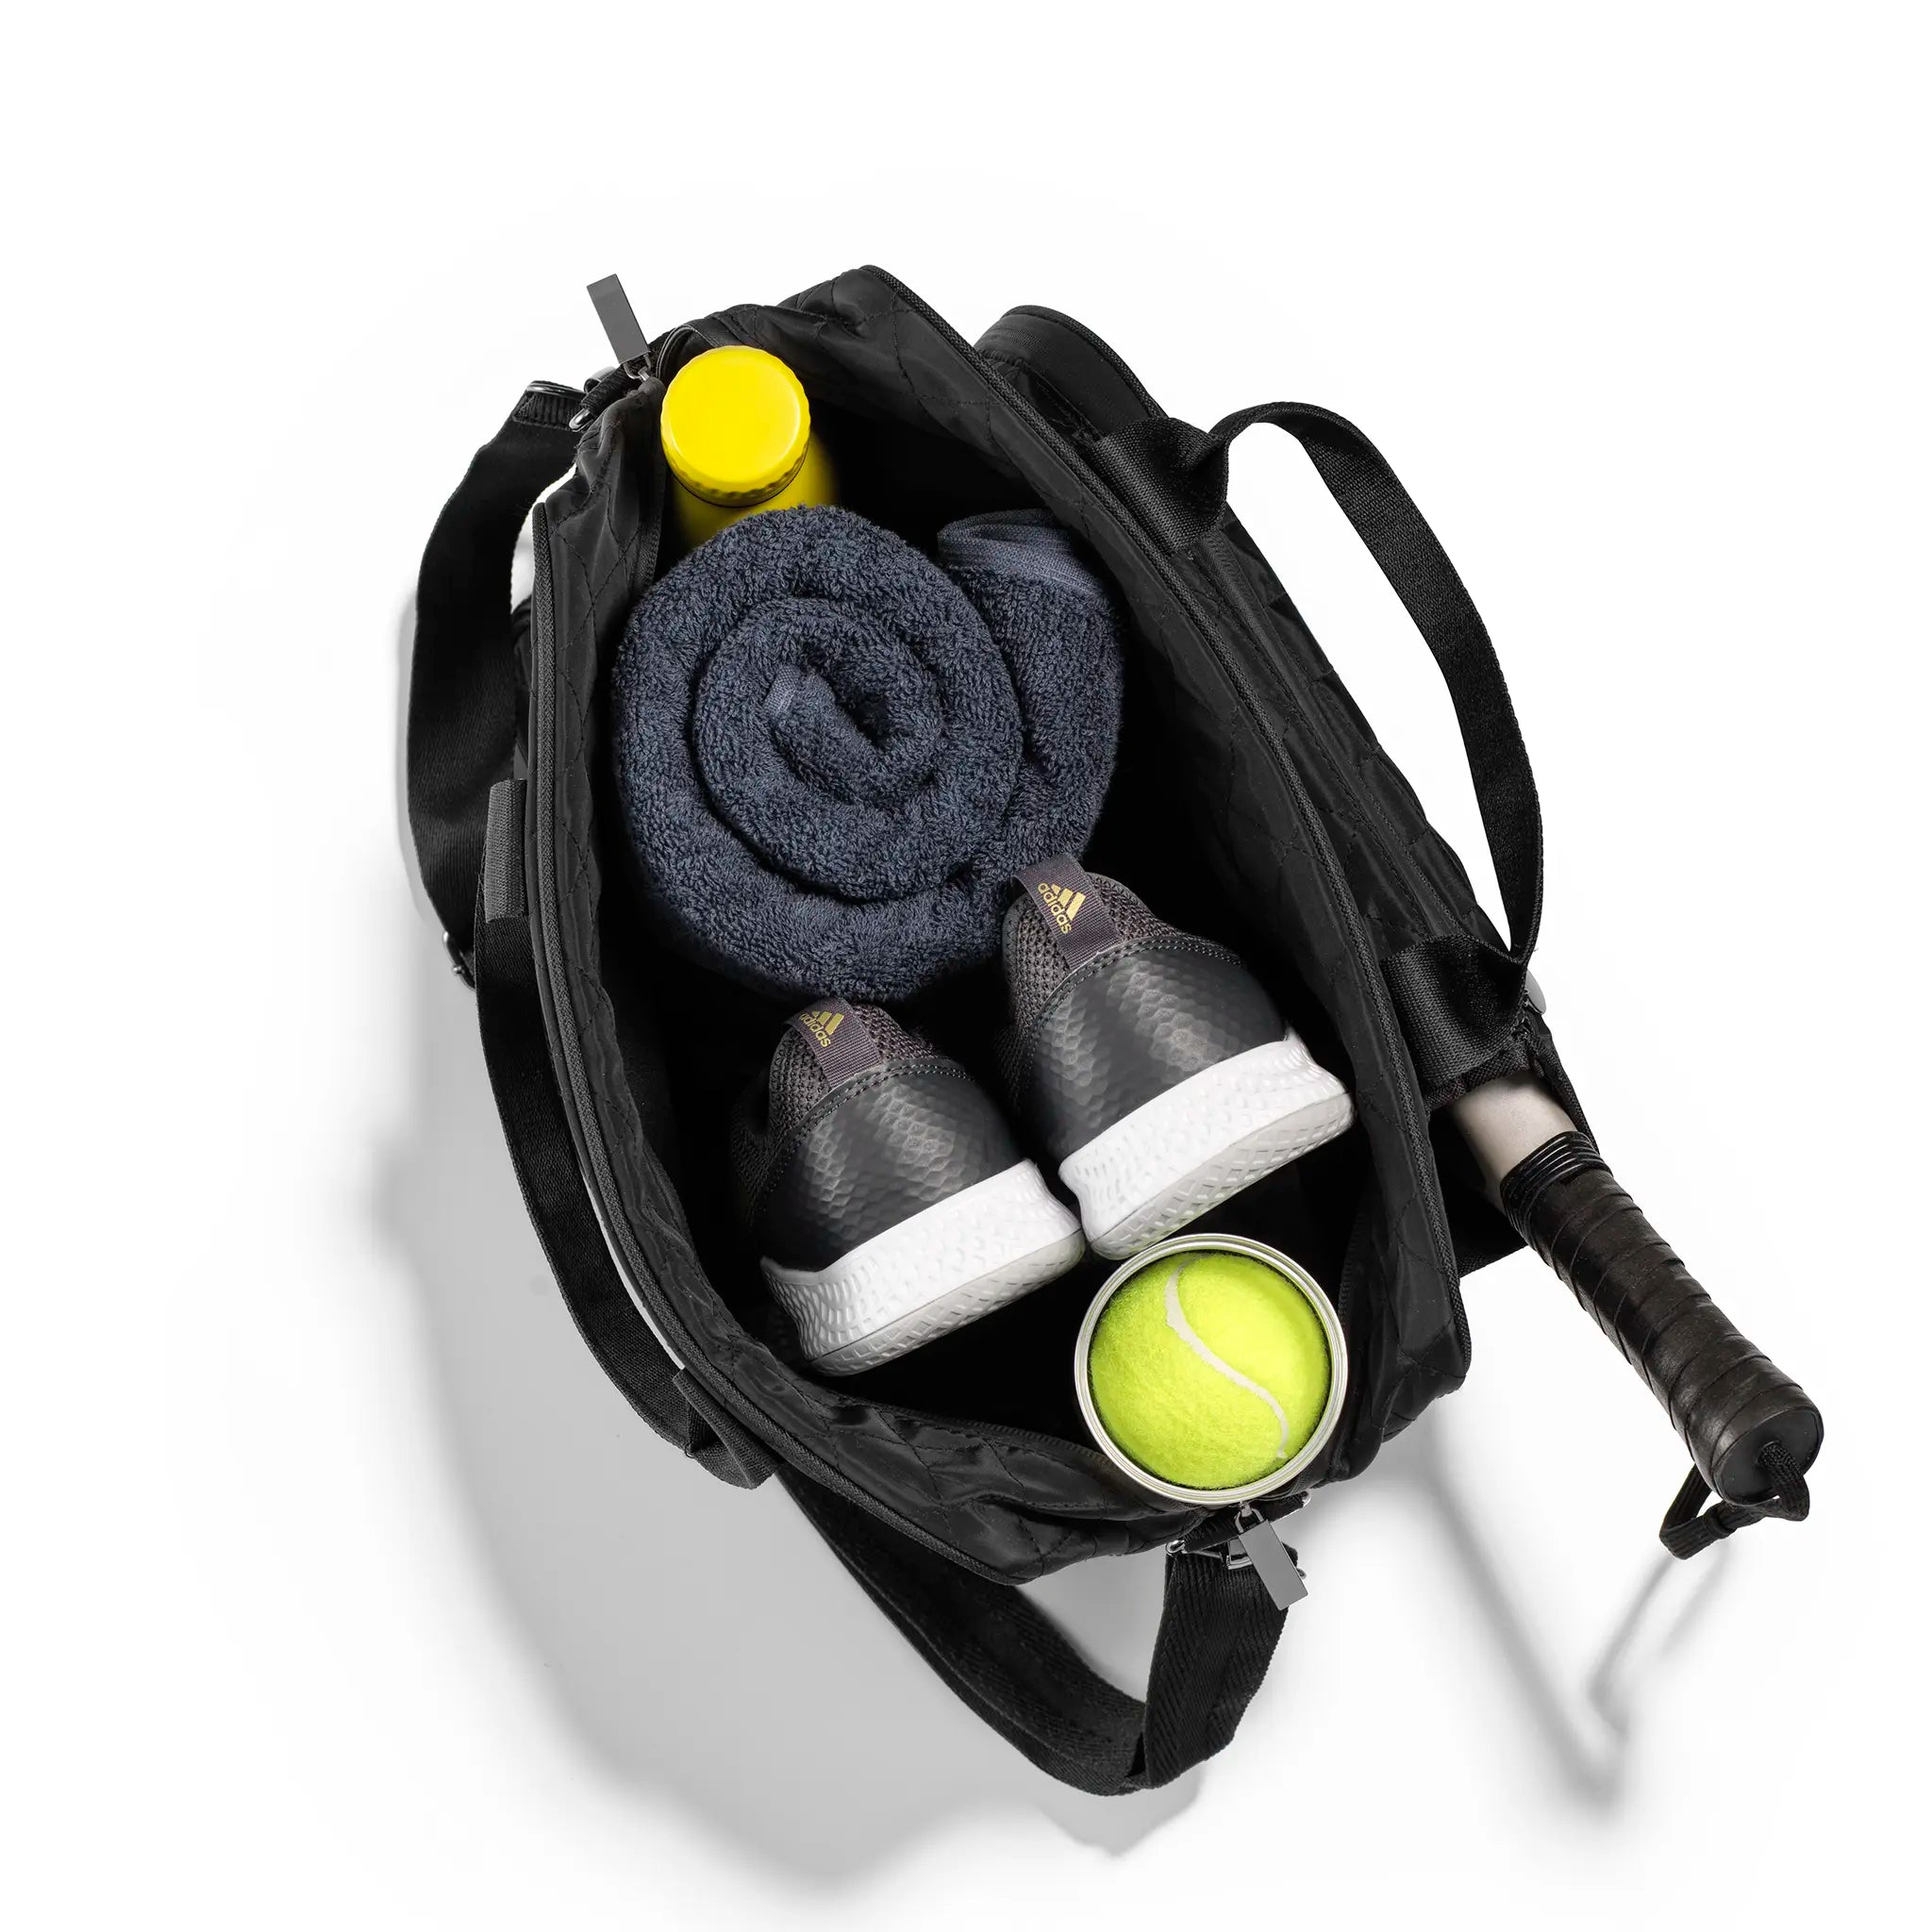 Esserly black padle tennis bag